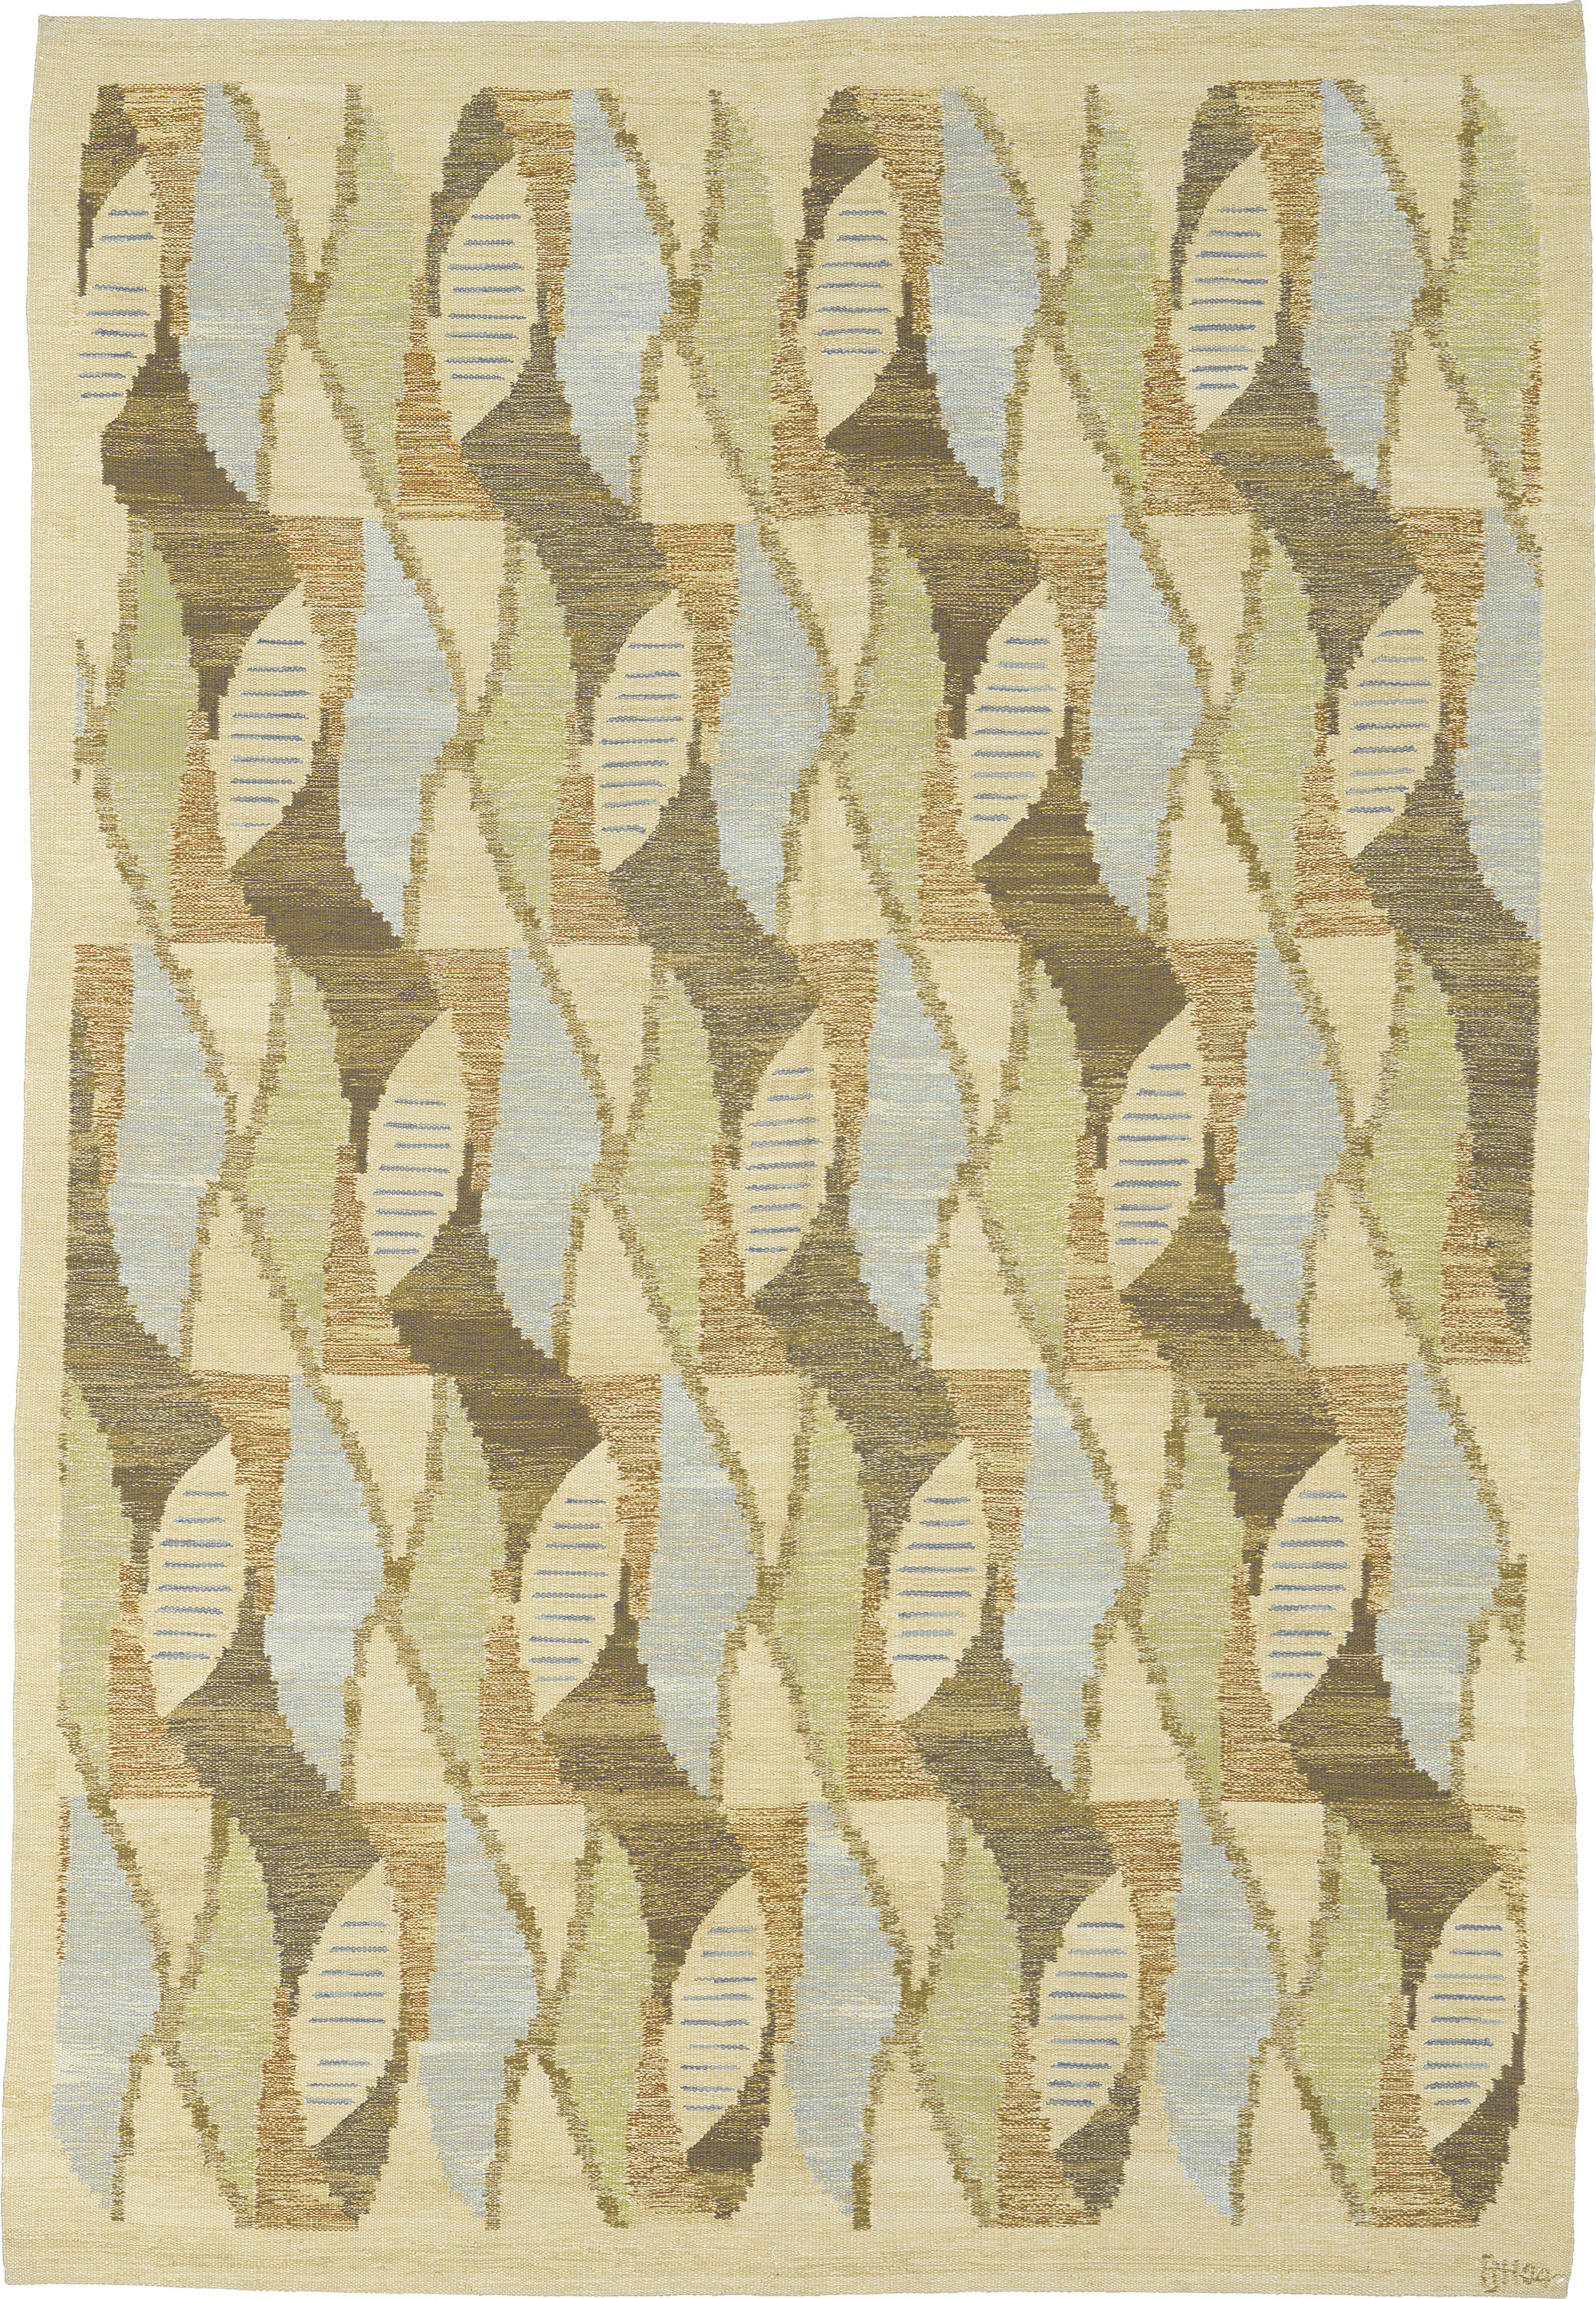 16494 Brita Design | Custom Swedish Inspired Design Carpet | FJ Hakimian | Carpet Gallery in NYC